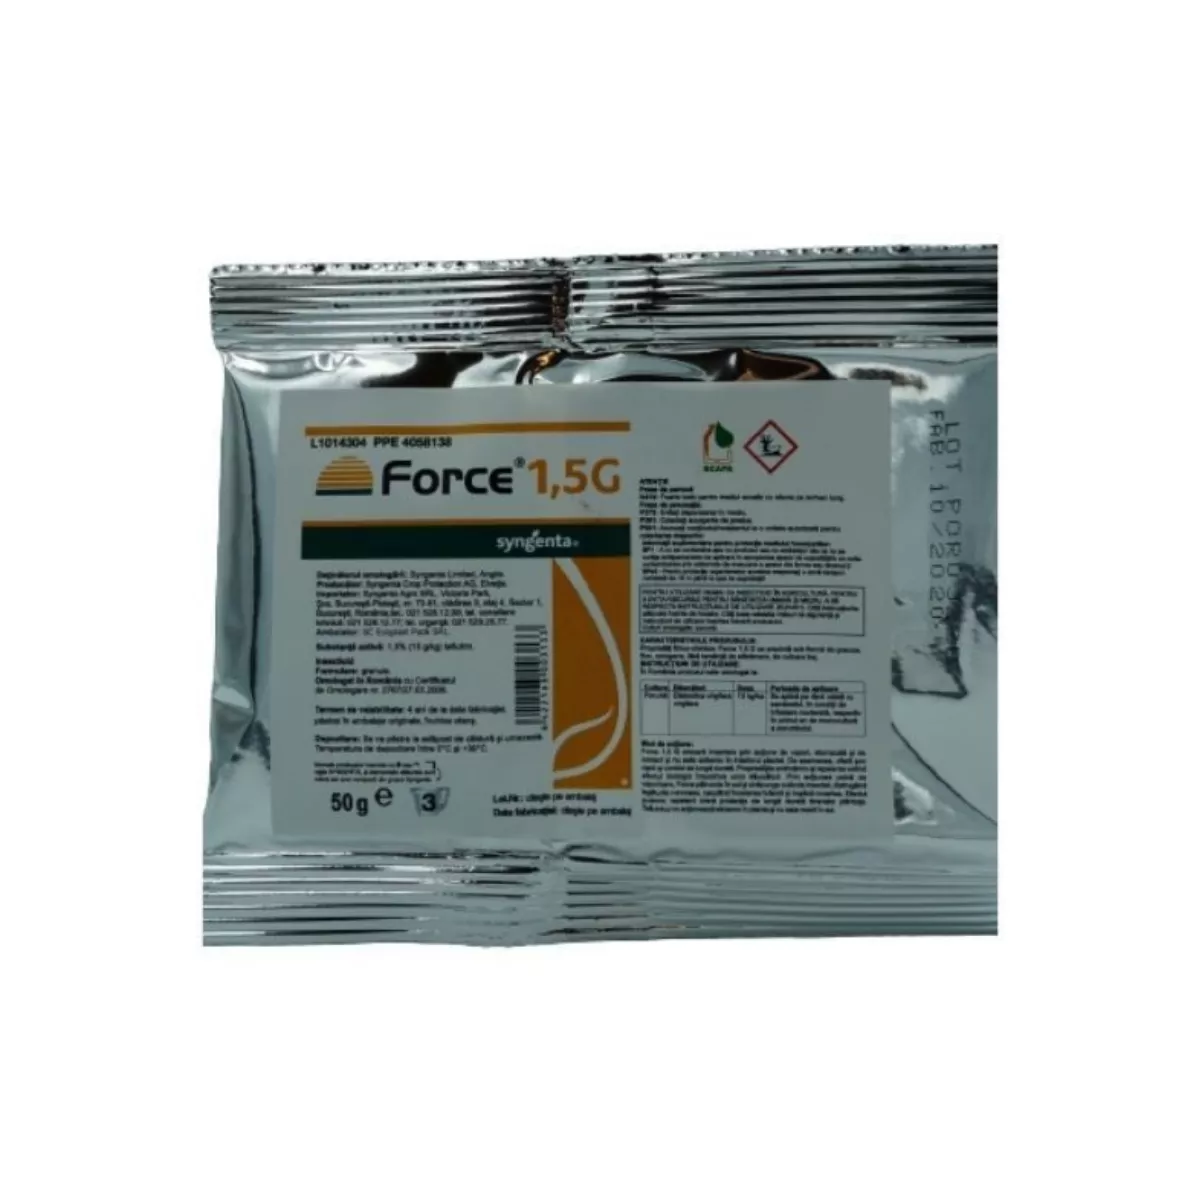 Insecticid de baza in combaterea daunatorilor din sol Force 1.5 G, 50 grame 1